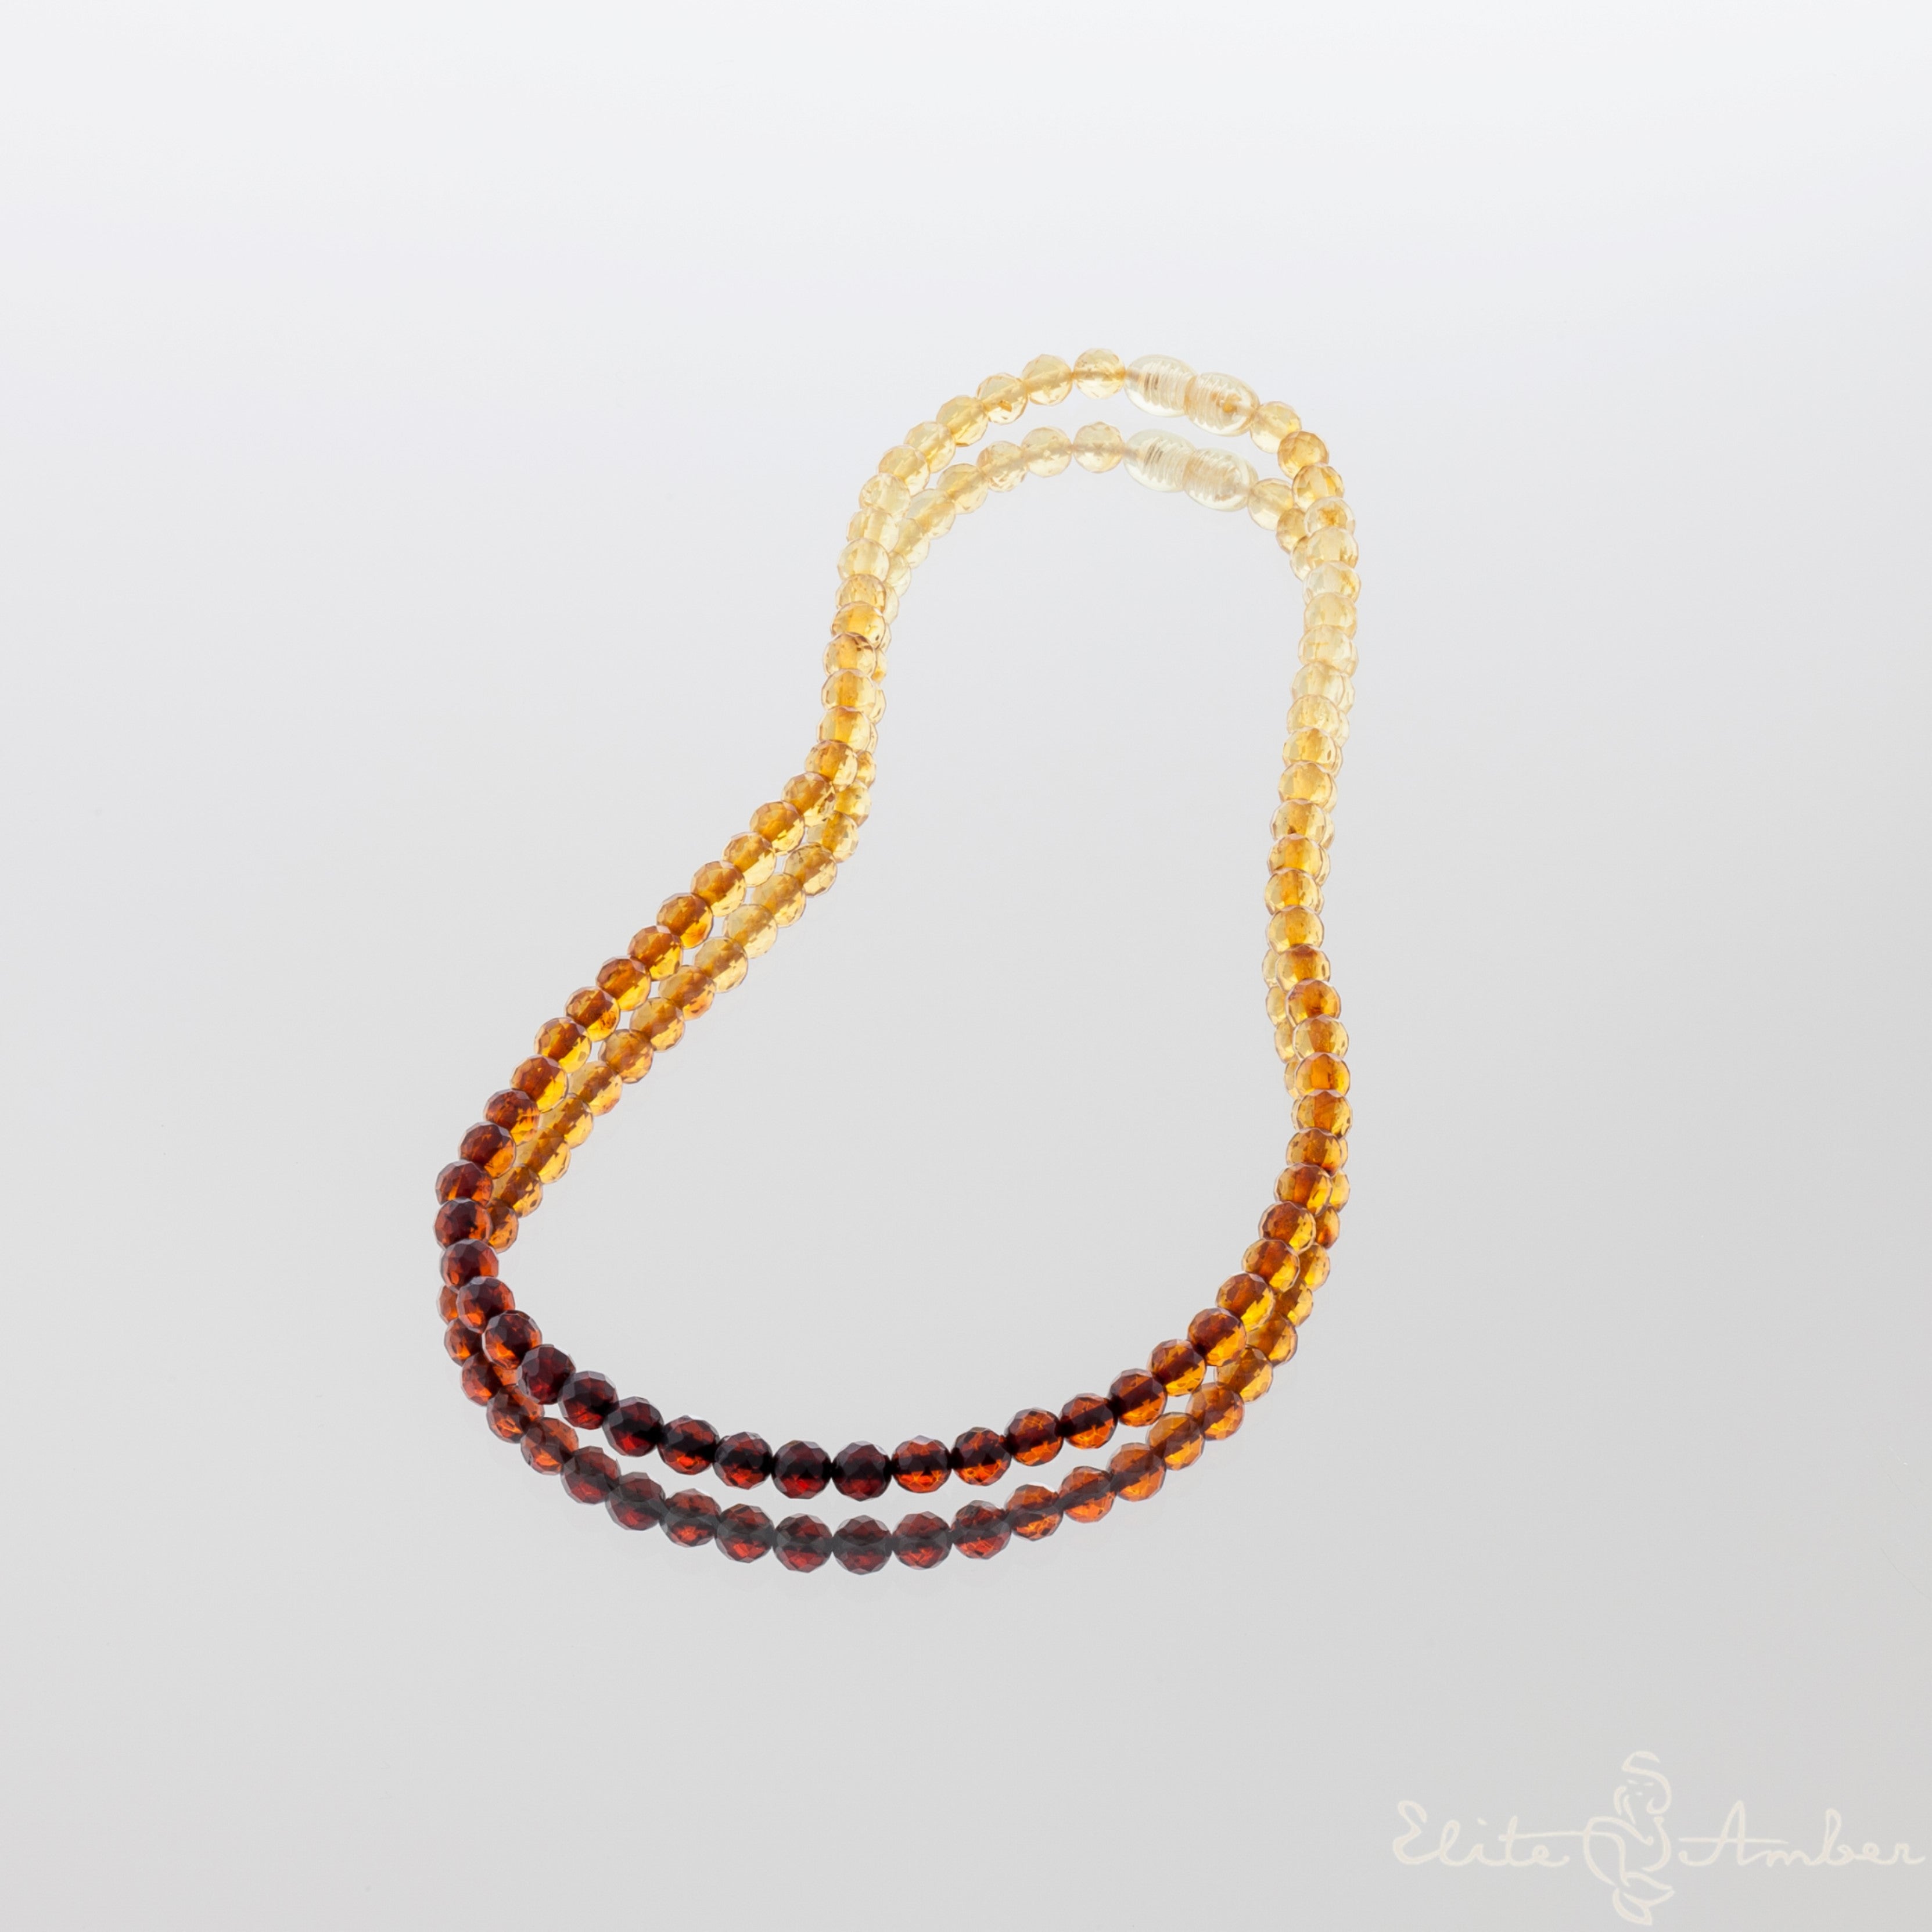 Amber necklace "Glossy rainbow"